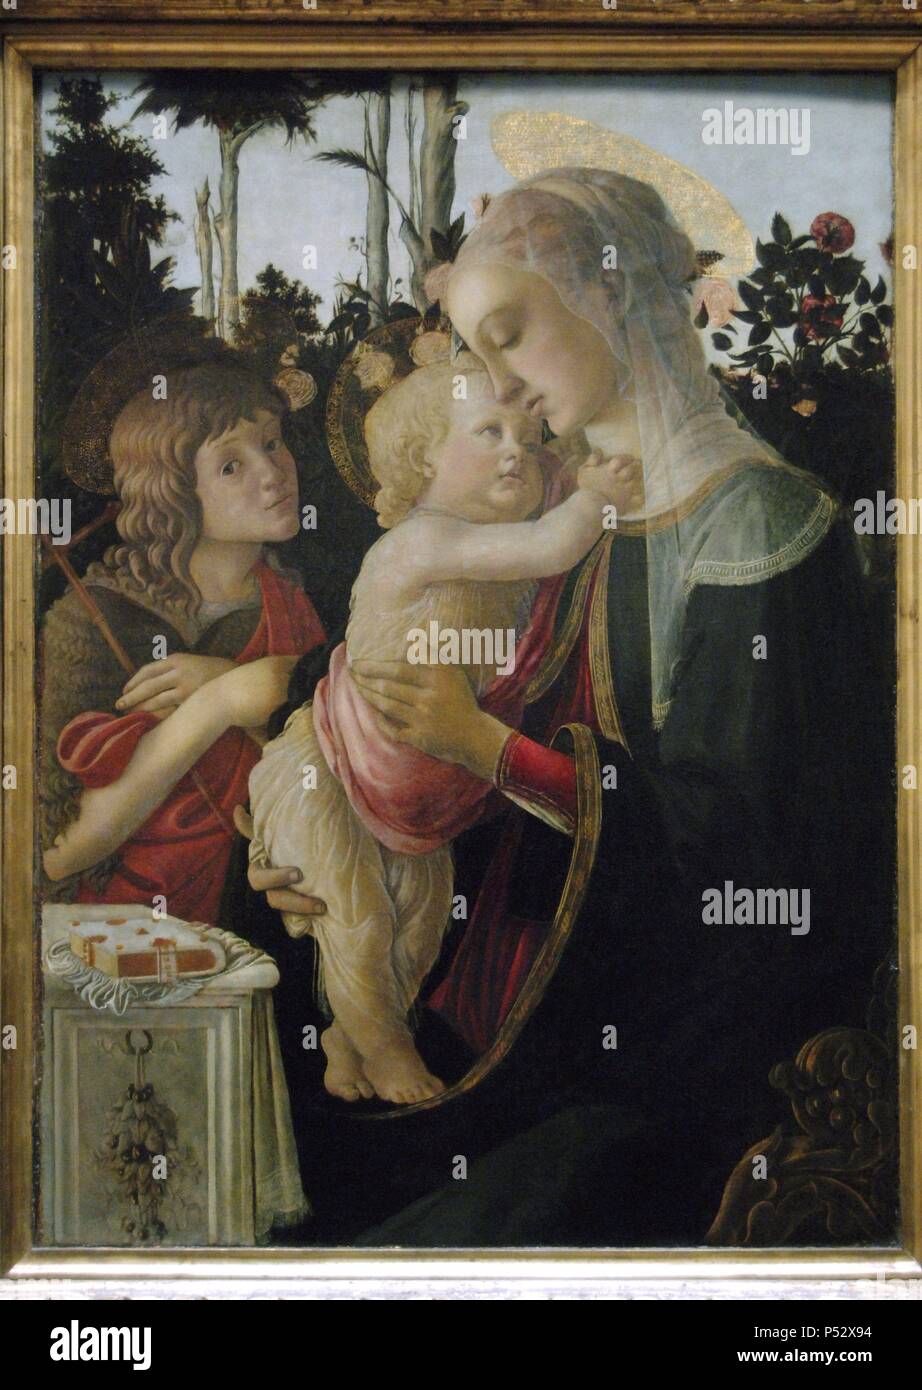 Sandro Botticelli (1445-1510). Italian painter of the Early Renaissance. Florentine School. Madonna and Child with St. John the Baptist. 1468. Tempera on panel. Louvre Museum. Paris. France. Stock Photo